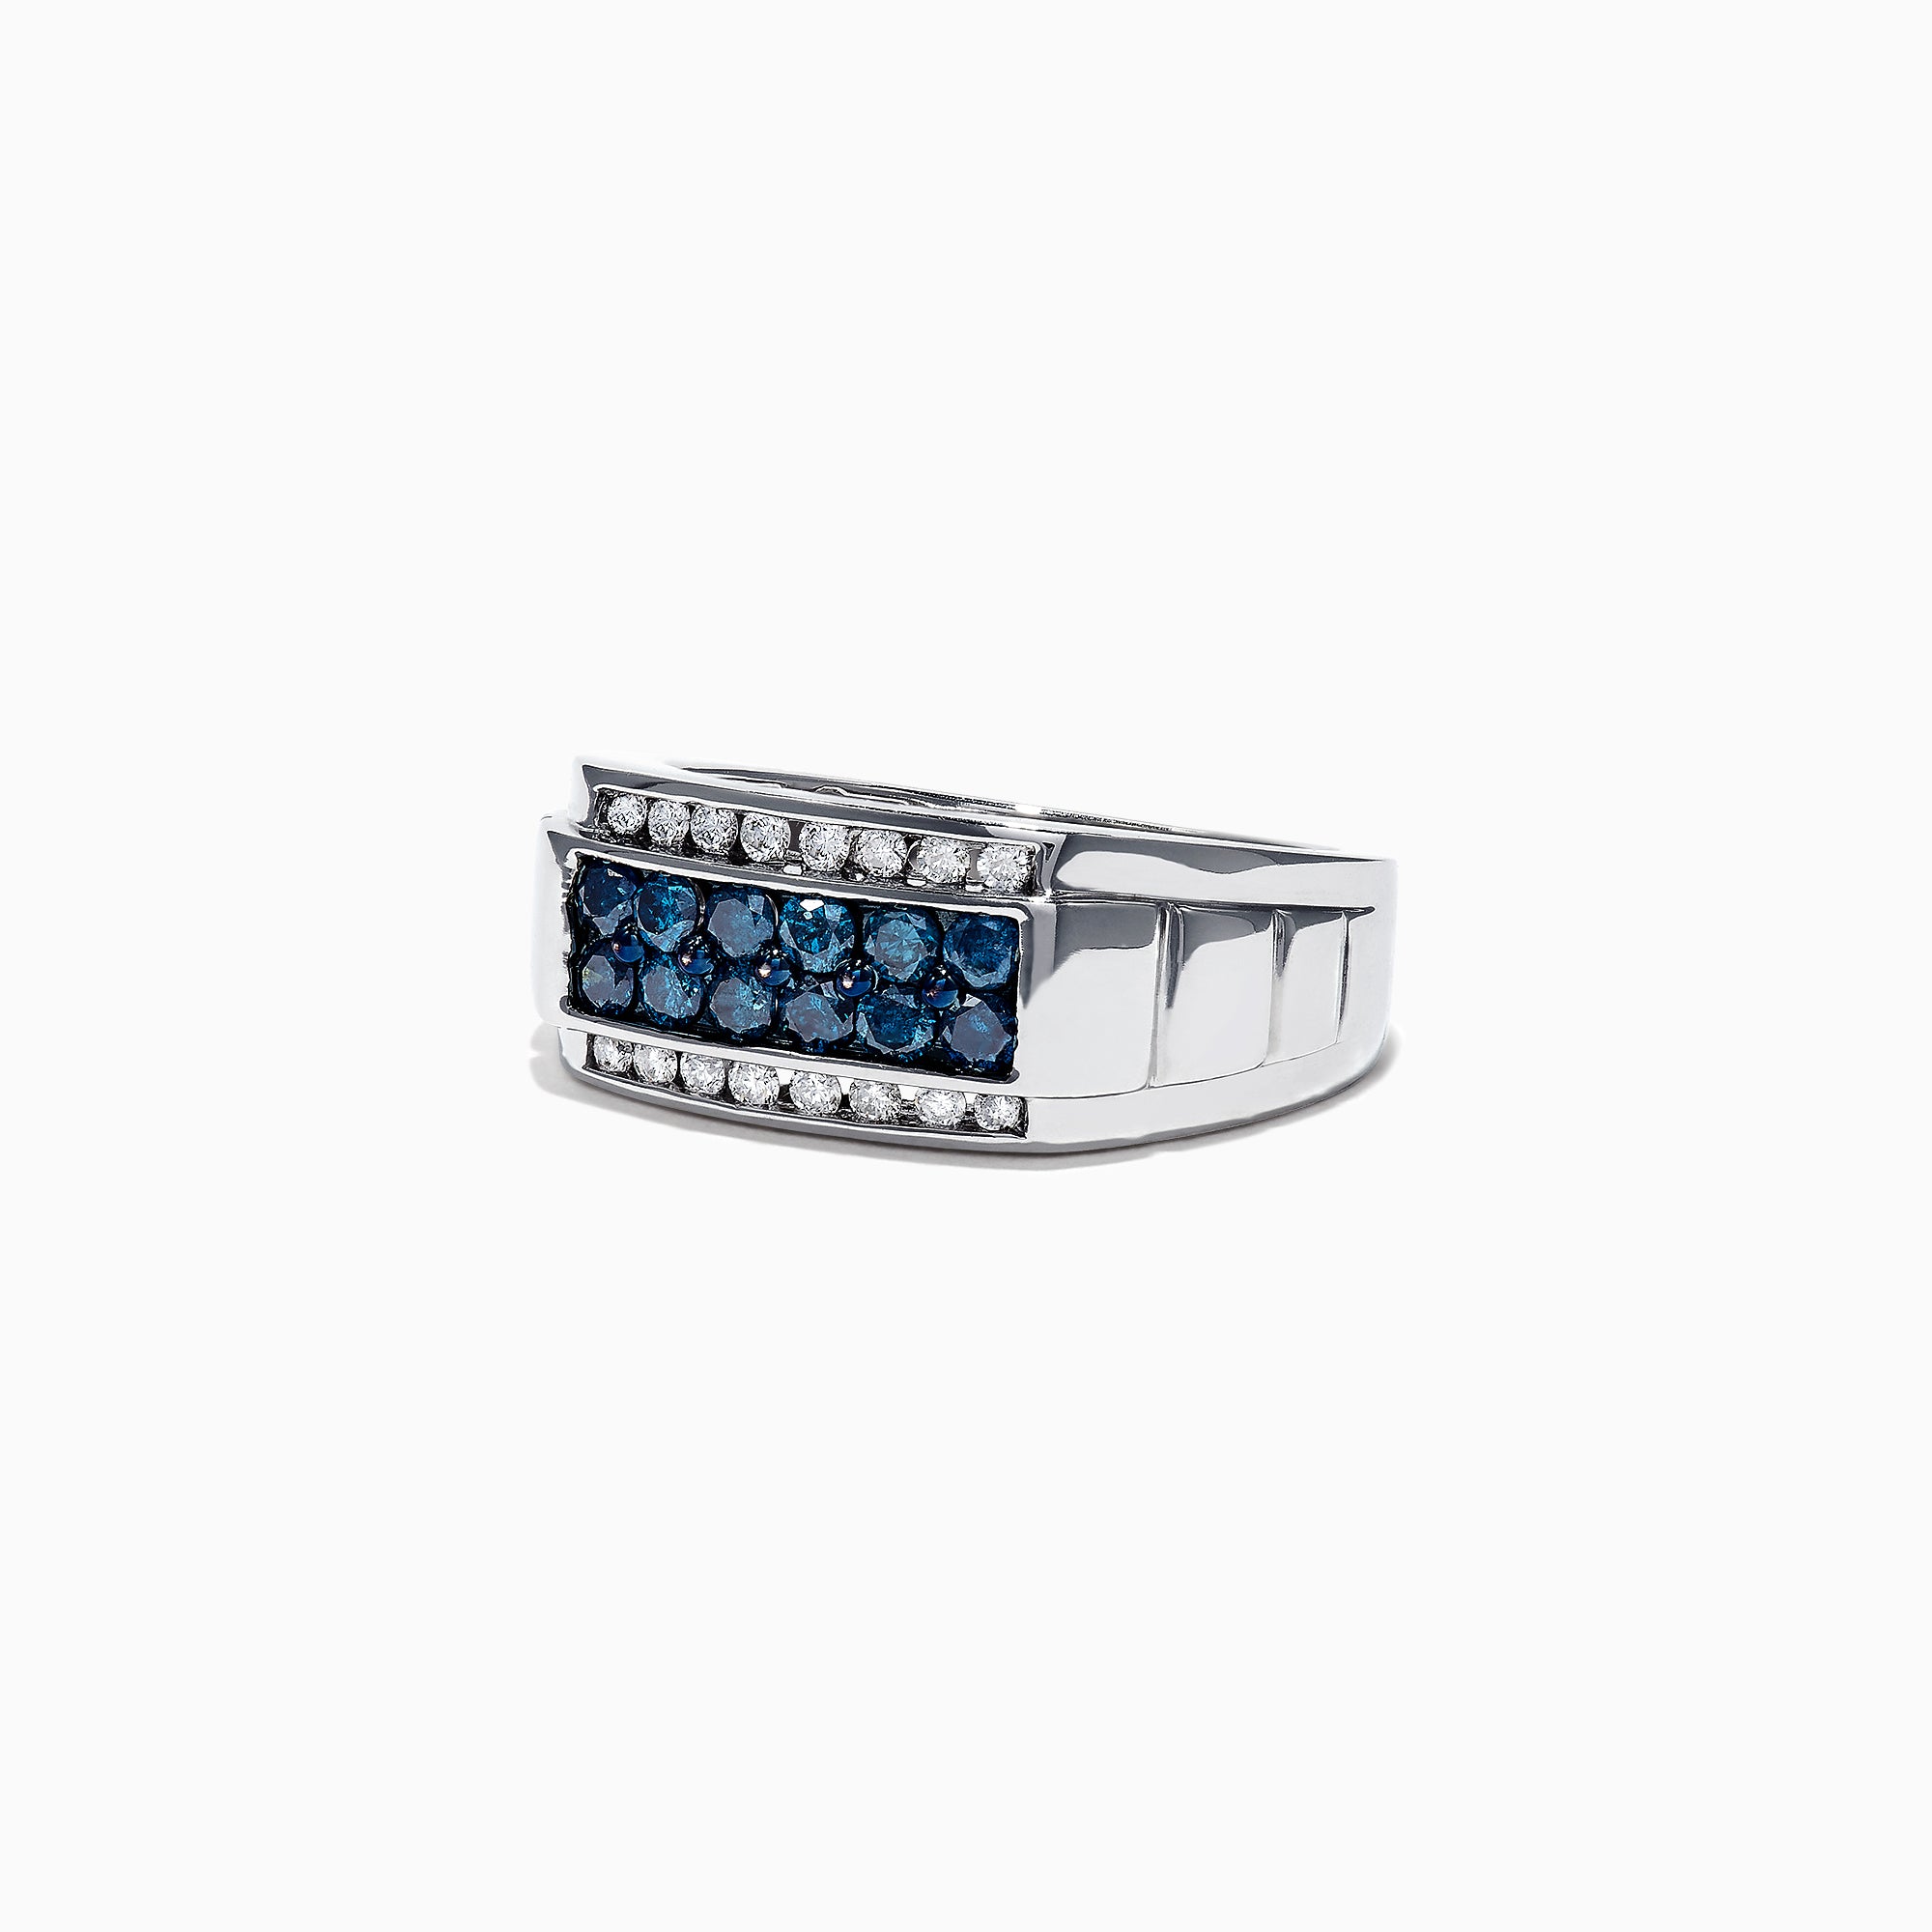 Effy Men's 14K White Gold Blue and White Diamond Ring, 1.0 TCW